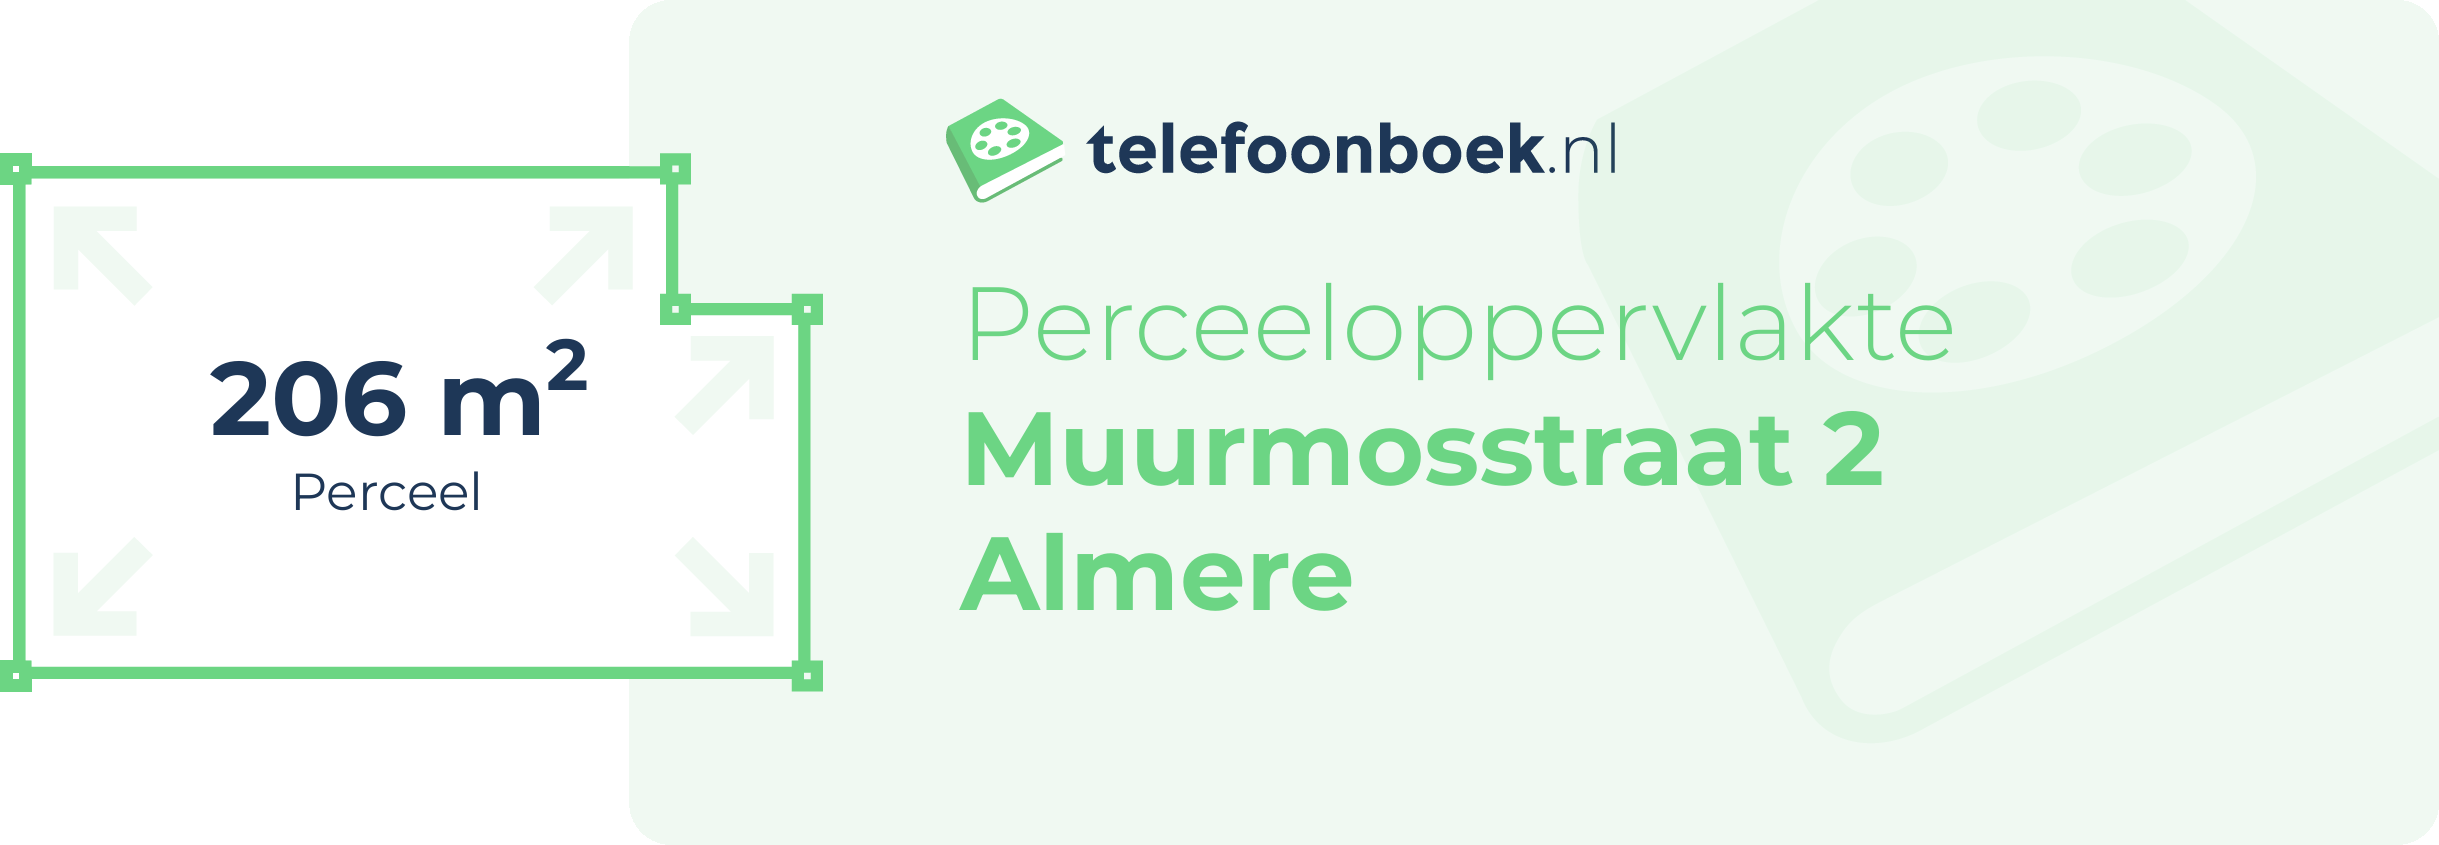 Perceeloppervlakte Muurmosstraat 2 Almere